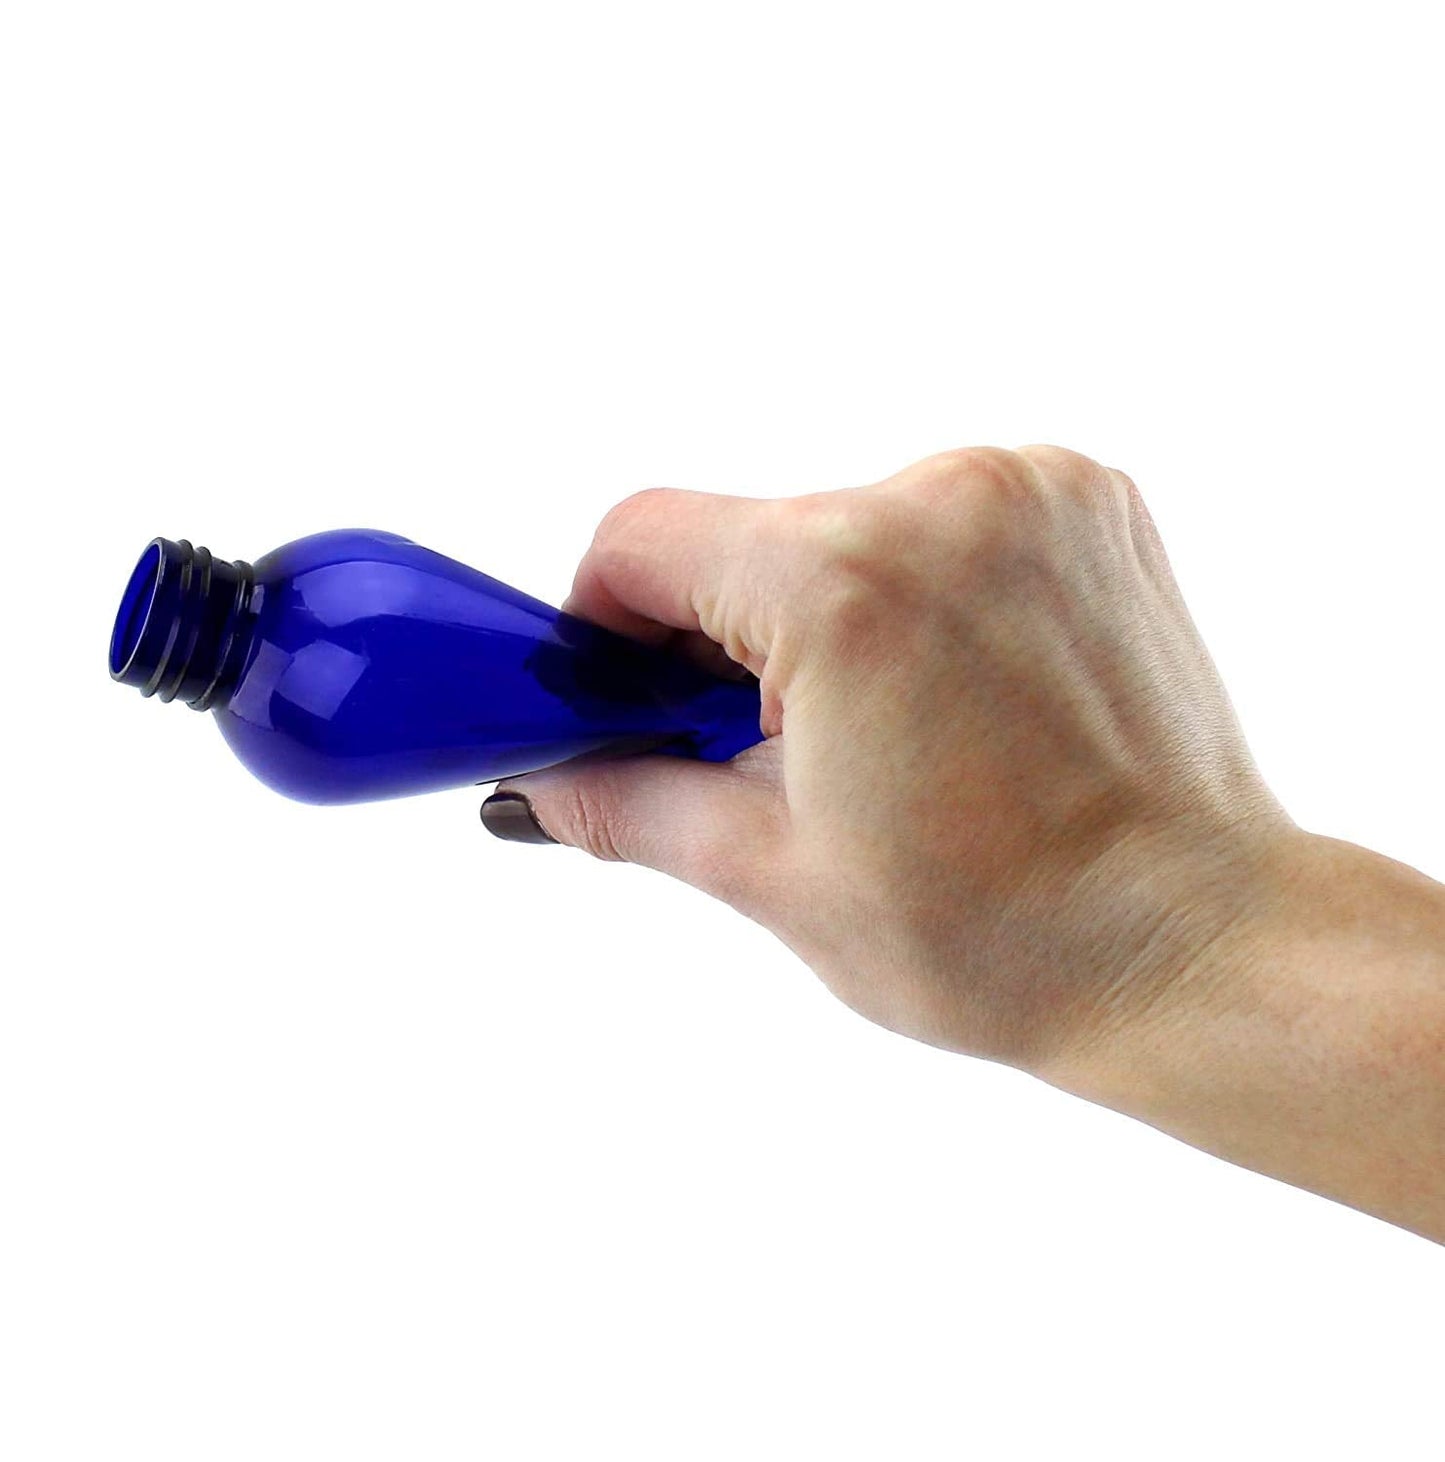 8oz Colored Plastic PET Spray Bottles w/ Fine Mist Atomizers (6-pack)